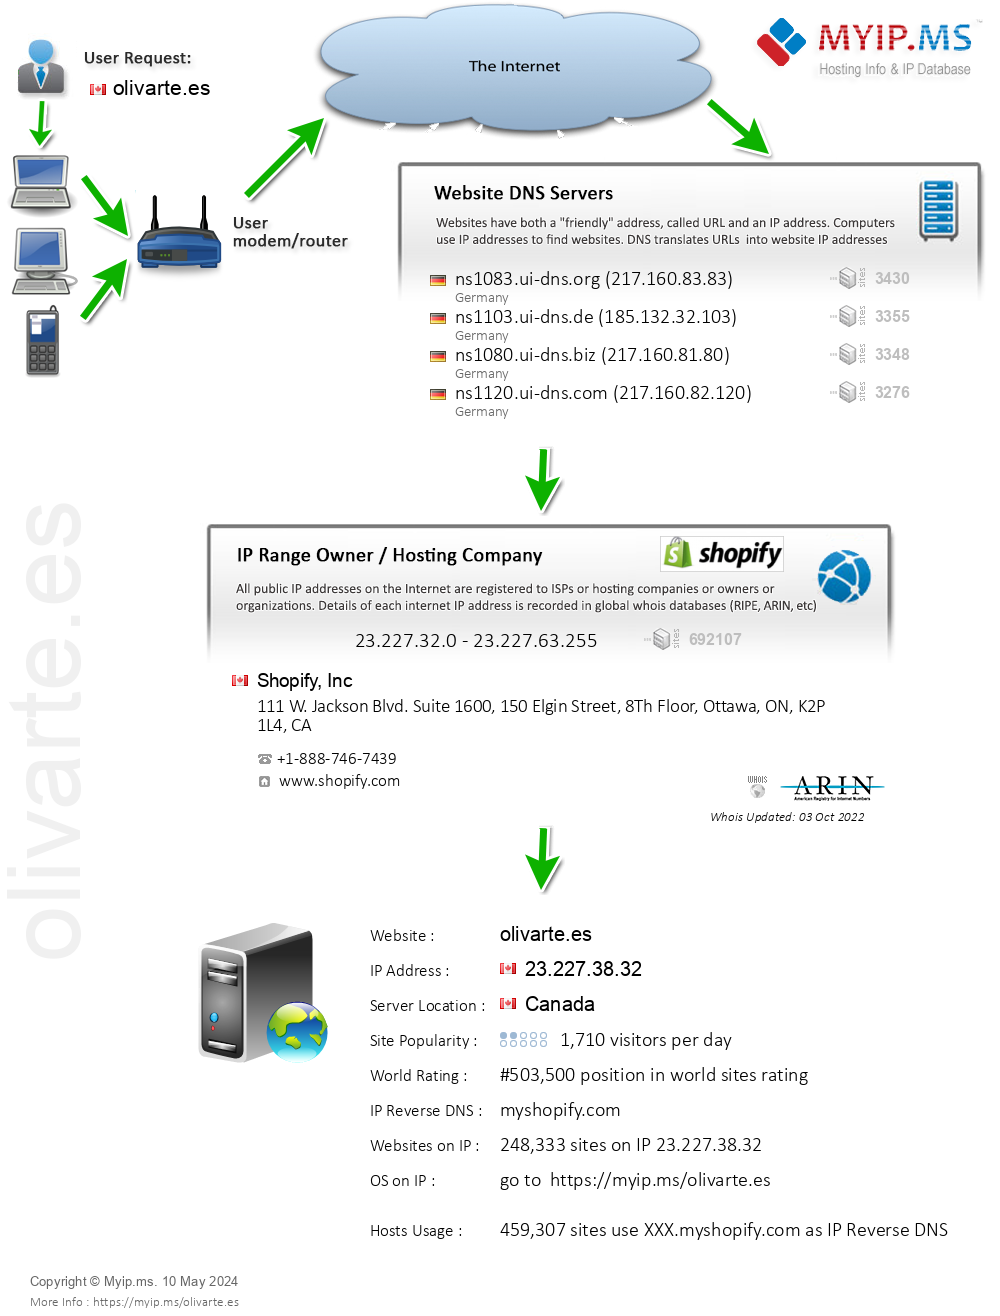 Olivarte.es - Website Hosting Visual IP Diagram